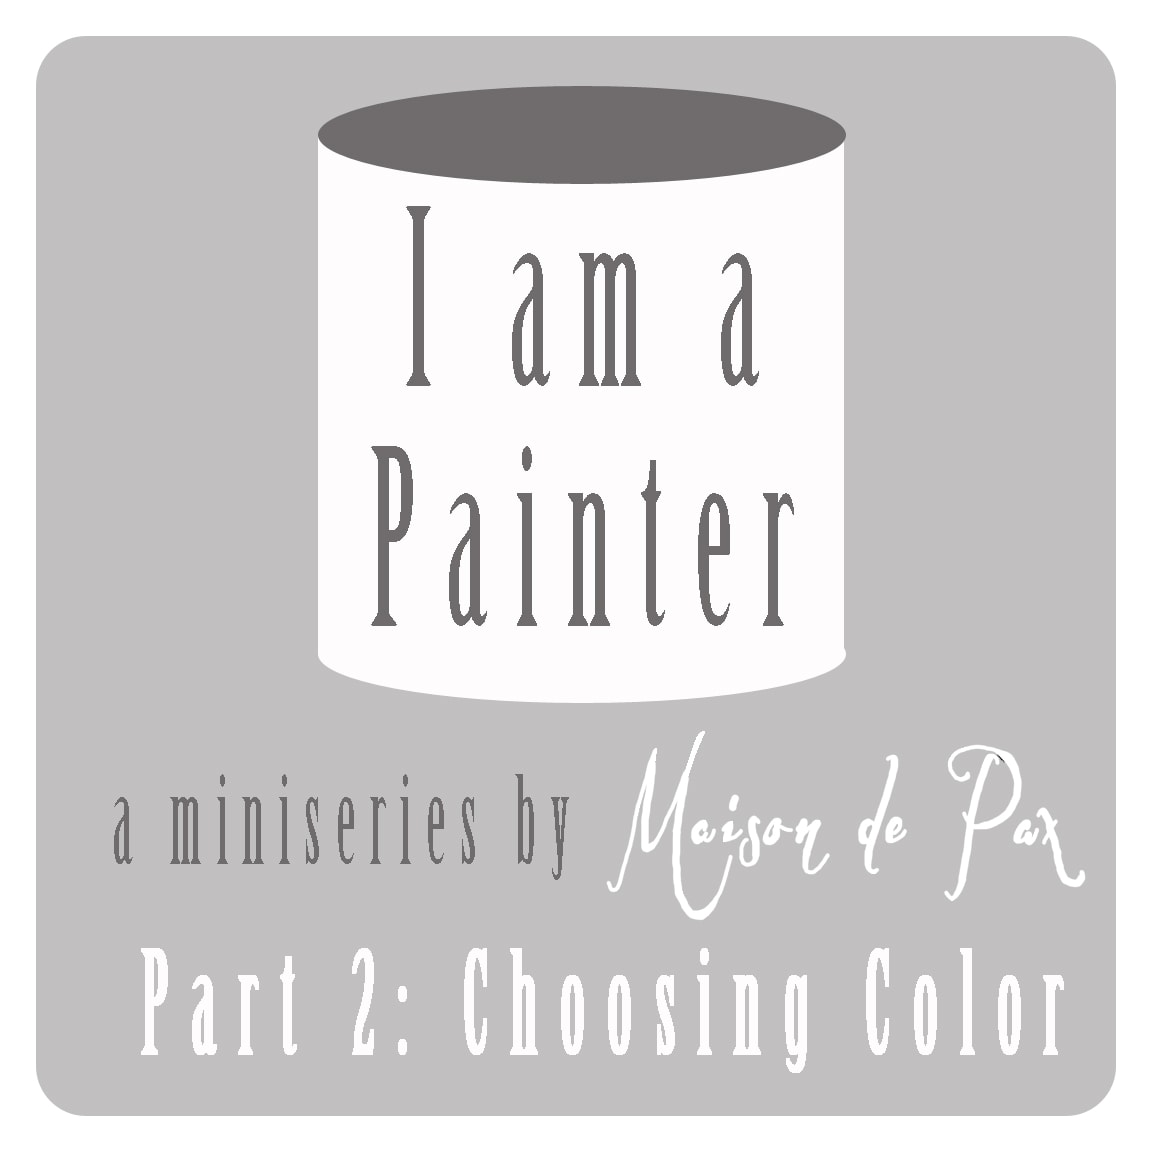 I am a Painter: choosing color